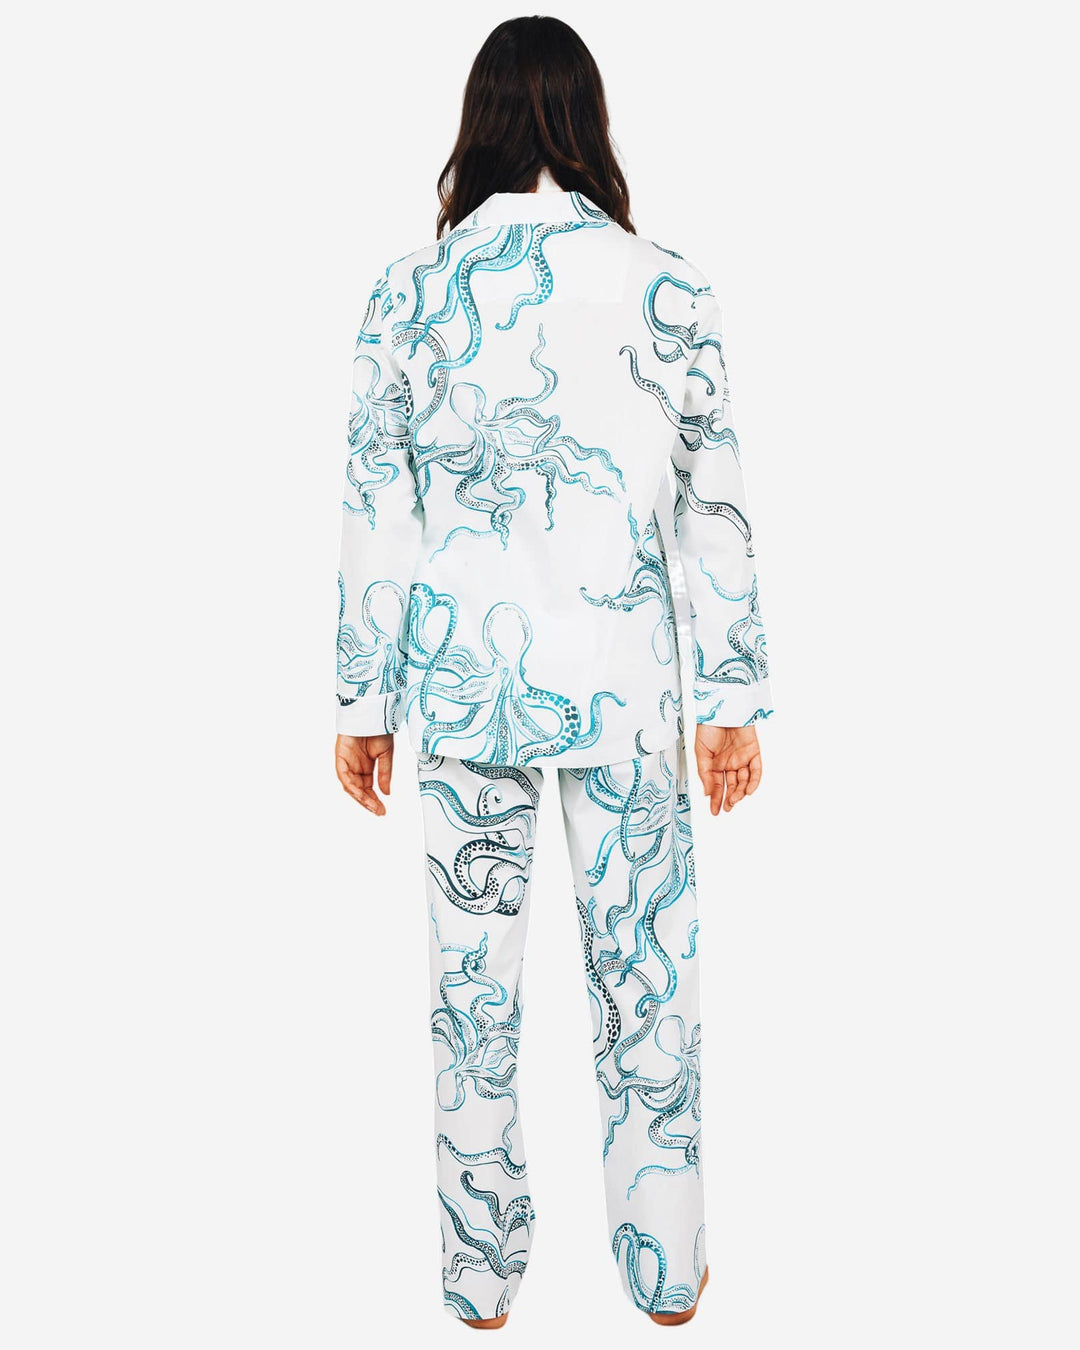 Womens cotton pyjamas set - Indigo octopuses on white